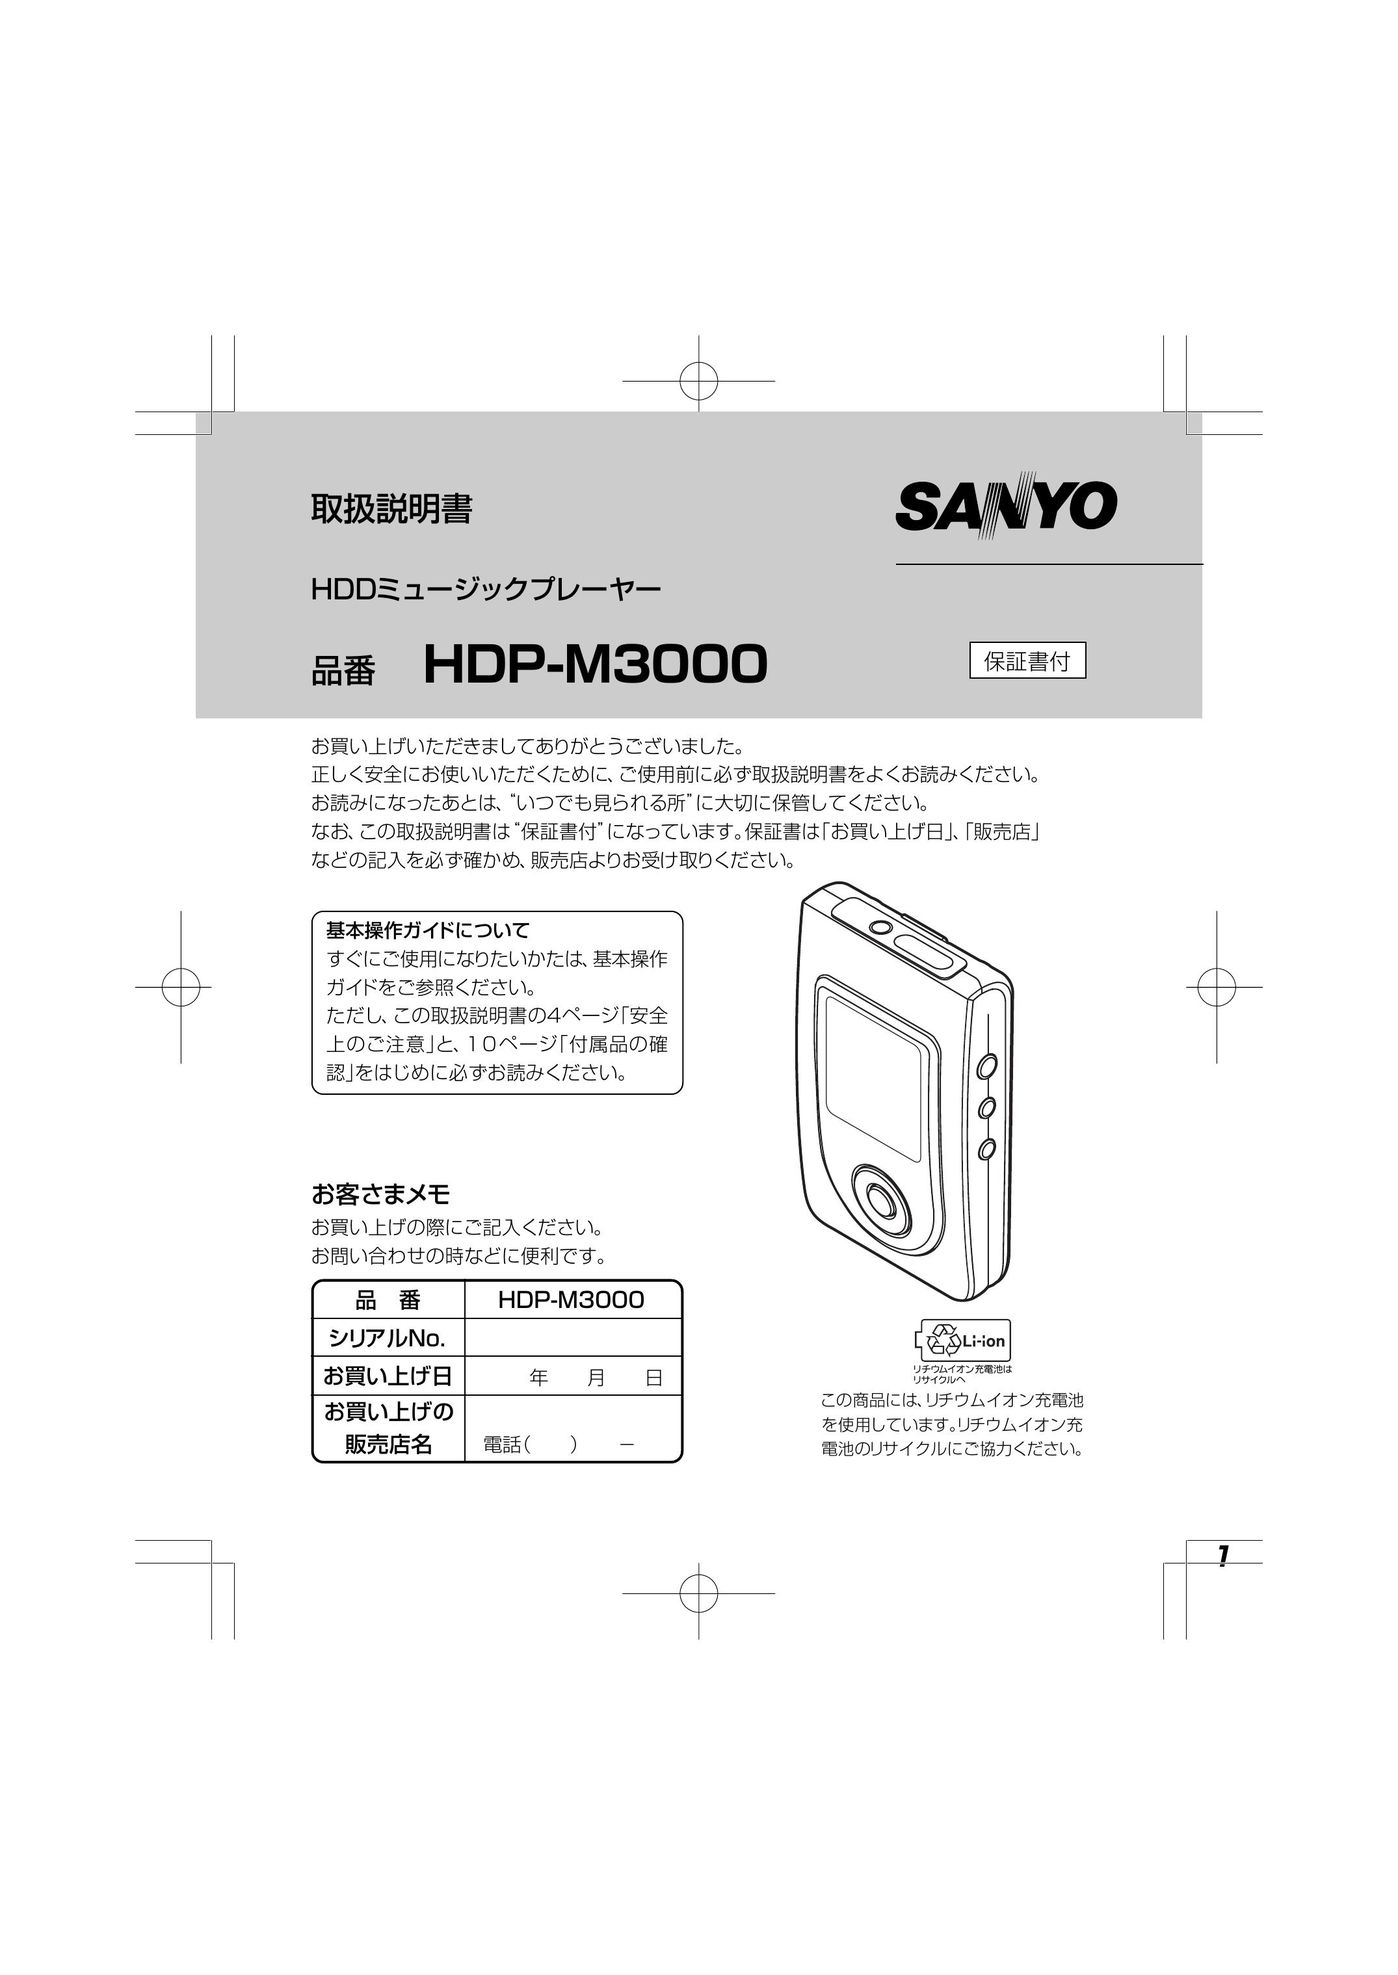 Minox HDP-M3000 MP3 Player User Manual